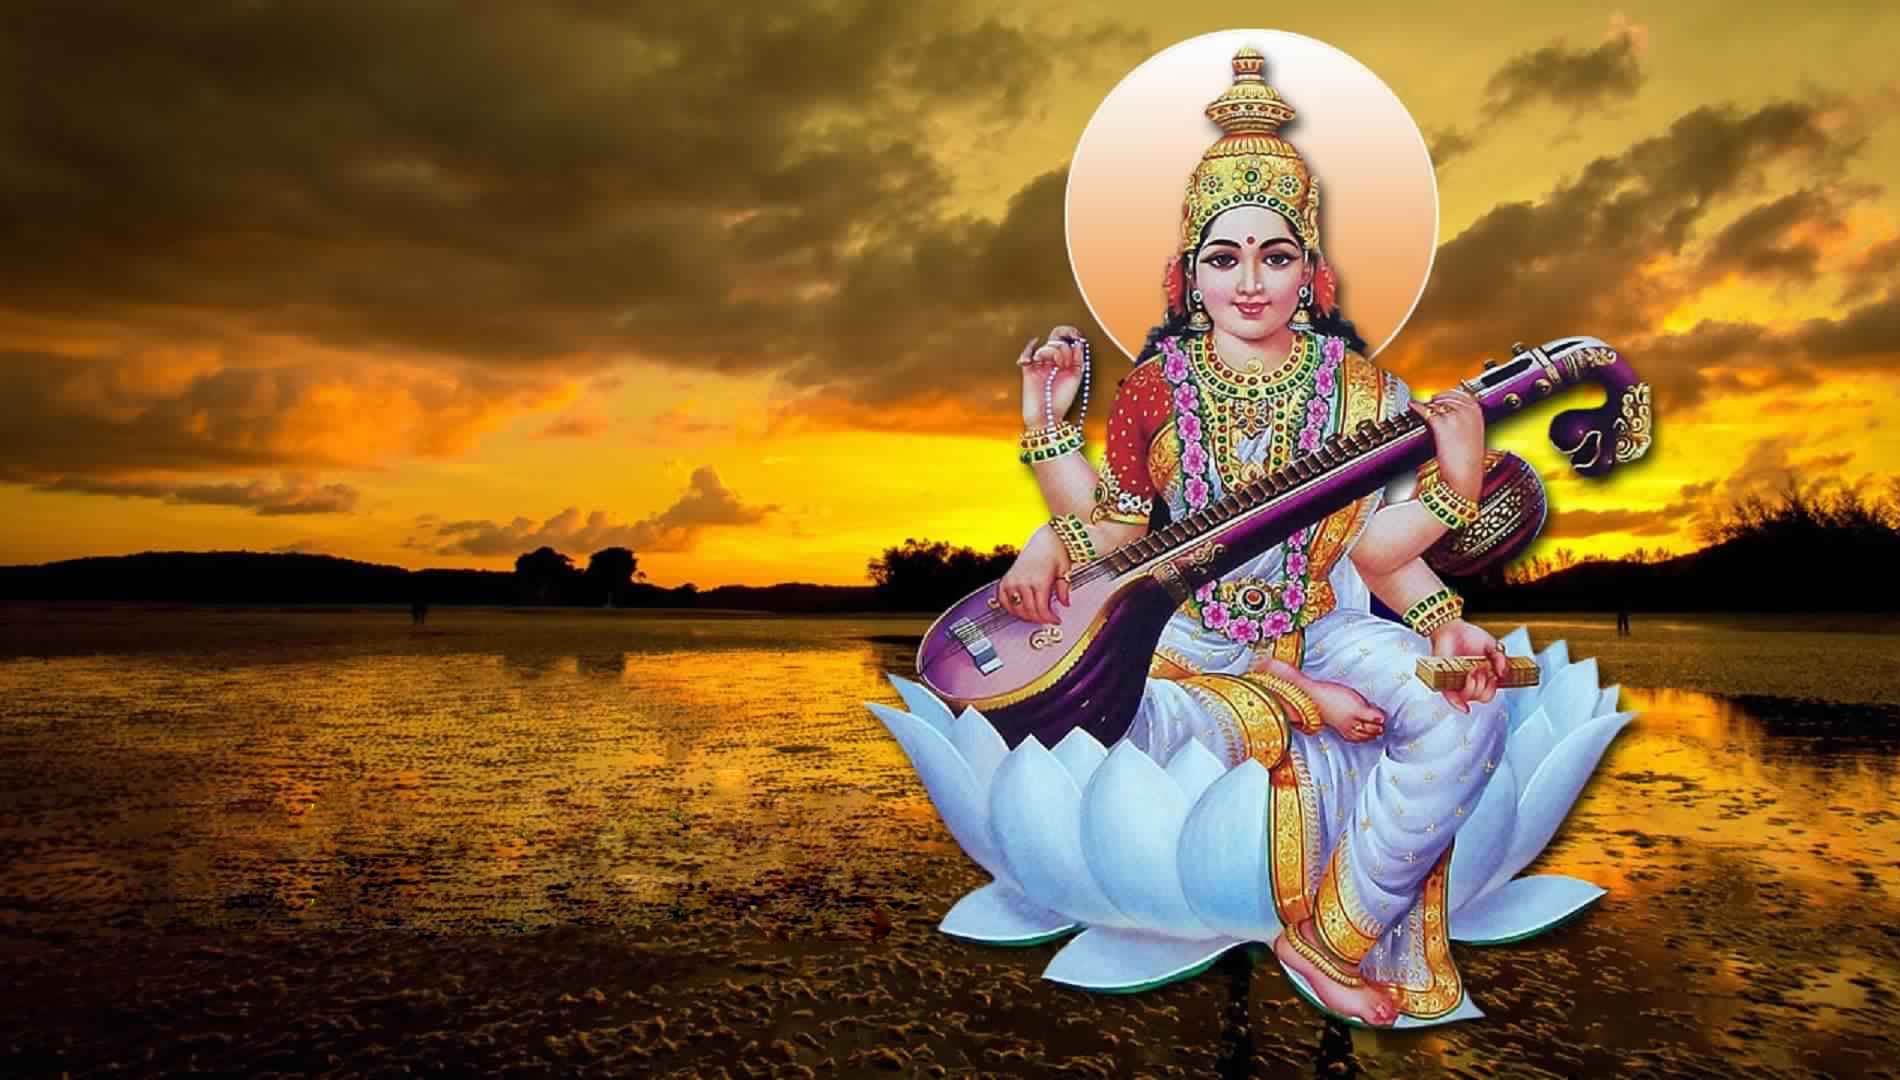 Saraswati Images Hd | Hindu Gods and Goddesses